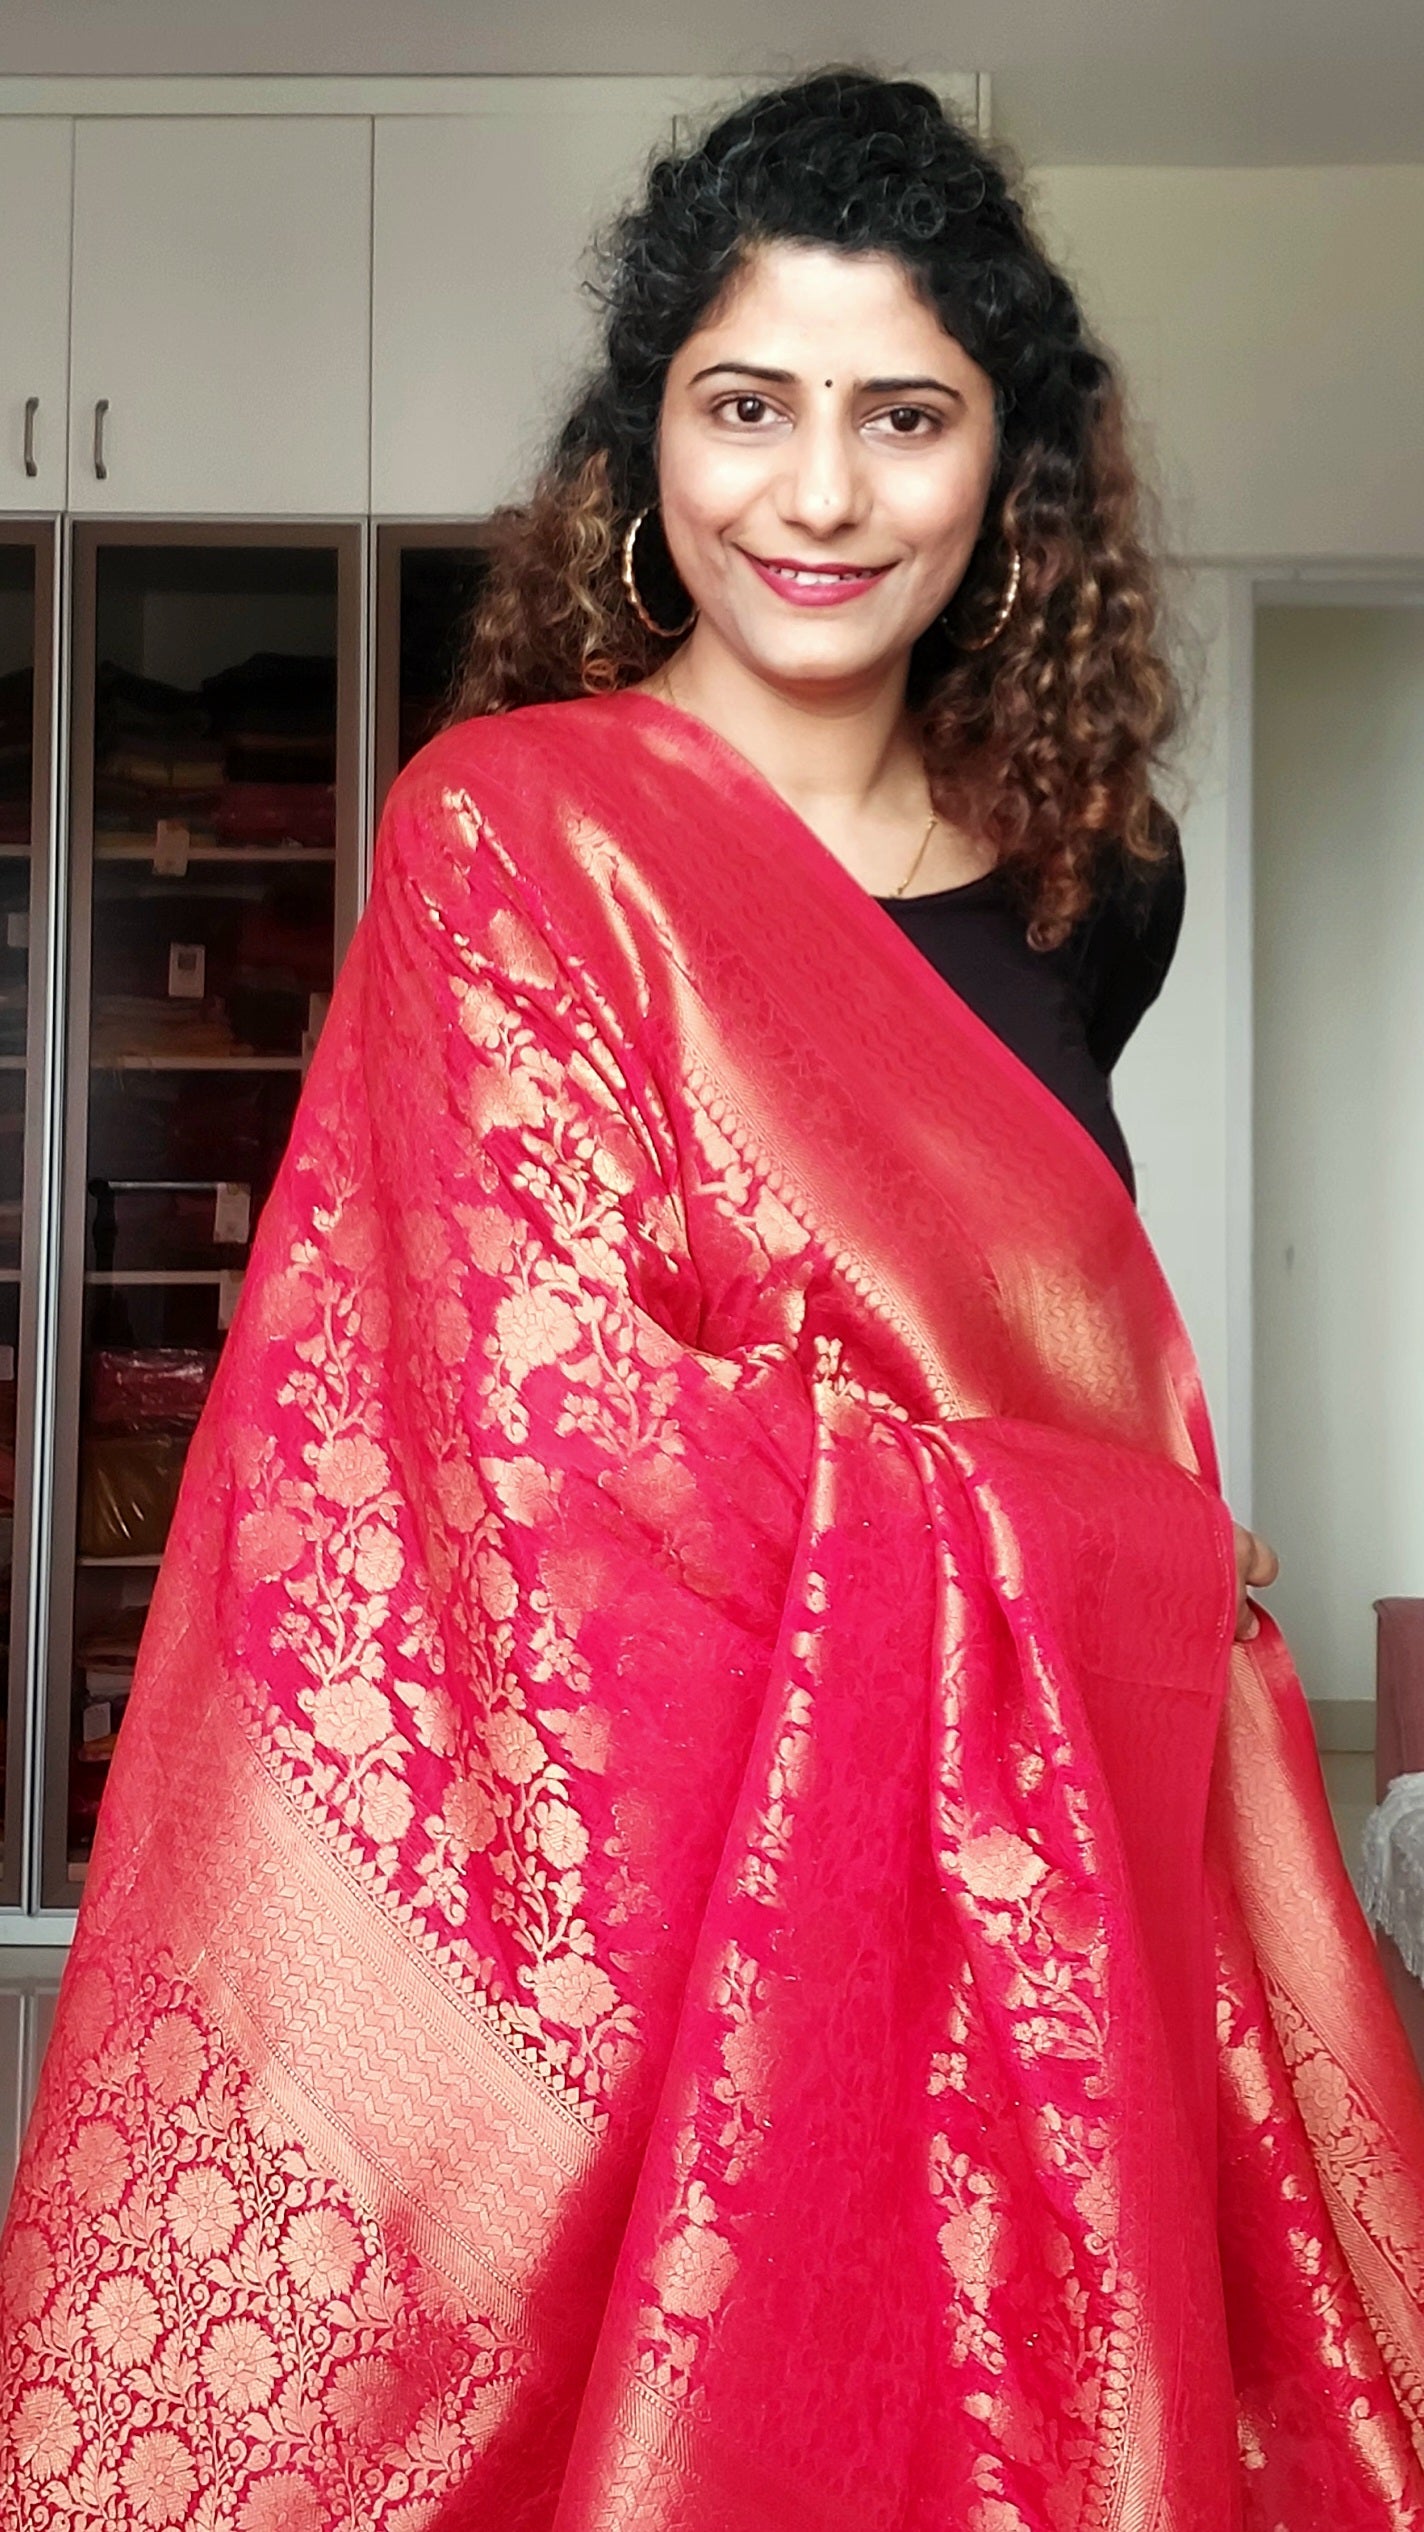 Banarasi Chiffon-Georgette Saree- Red